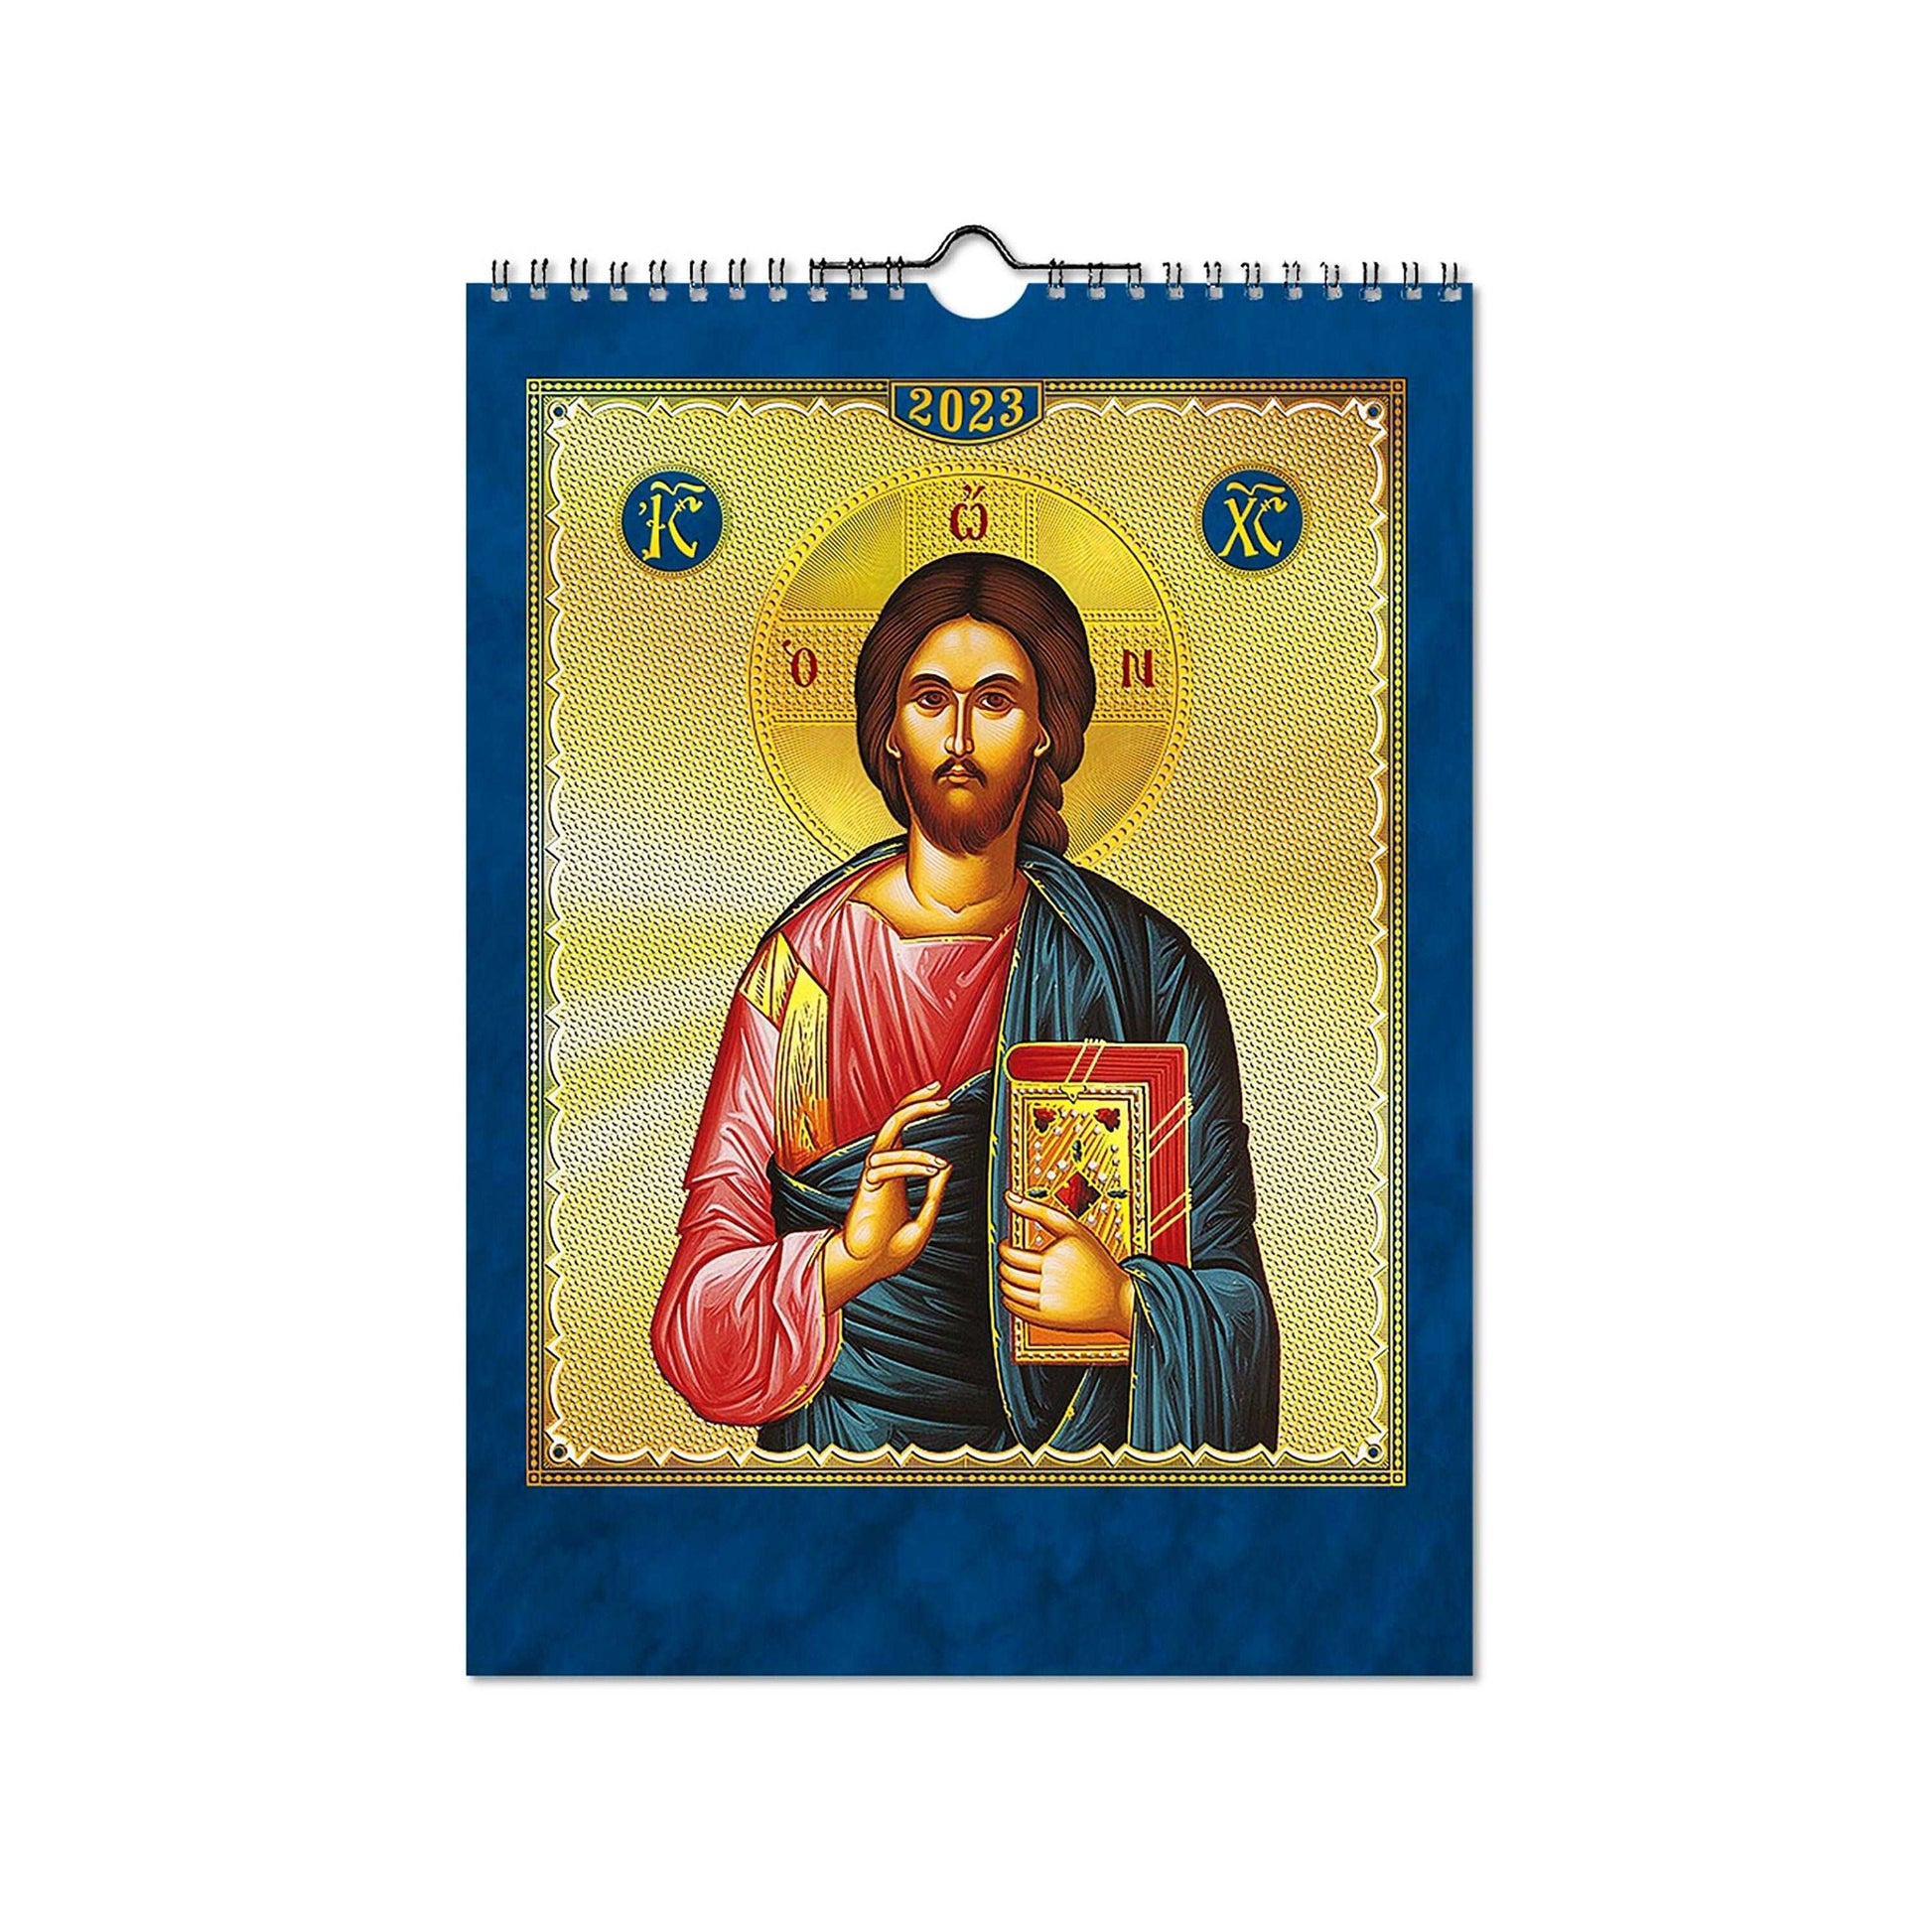 2023 30-day Wall Calendar Jesus Christ, Saints Feast days Apolytikio Orthodox Greek Calendar Embossed Gold print religious gift wall decor TheHolyArt